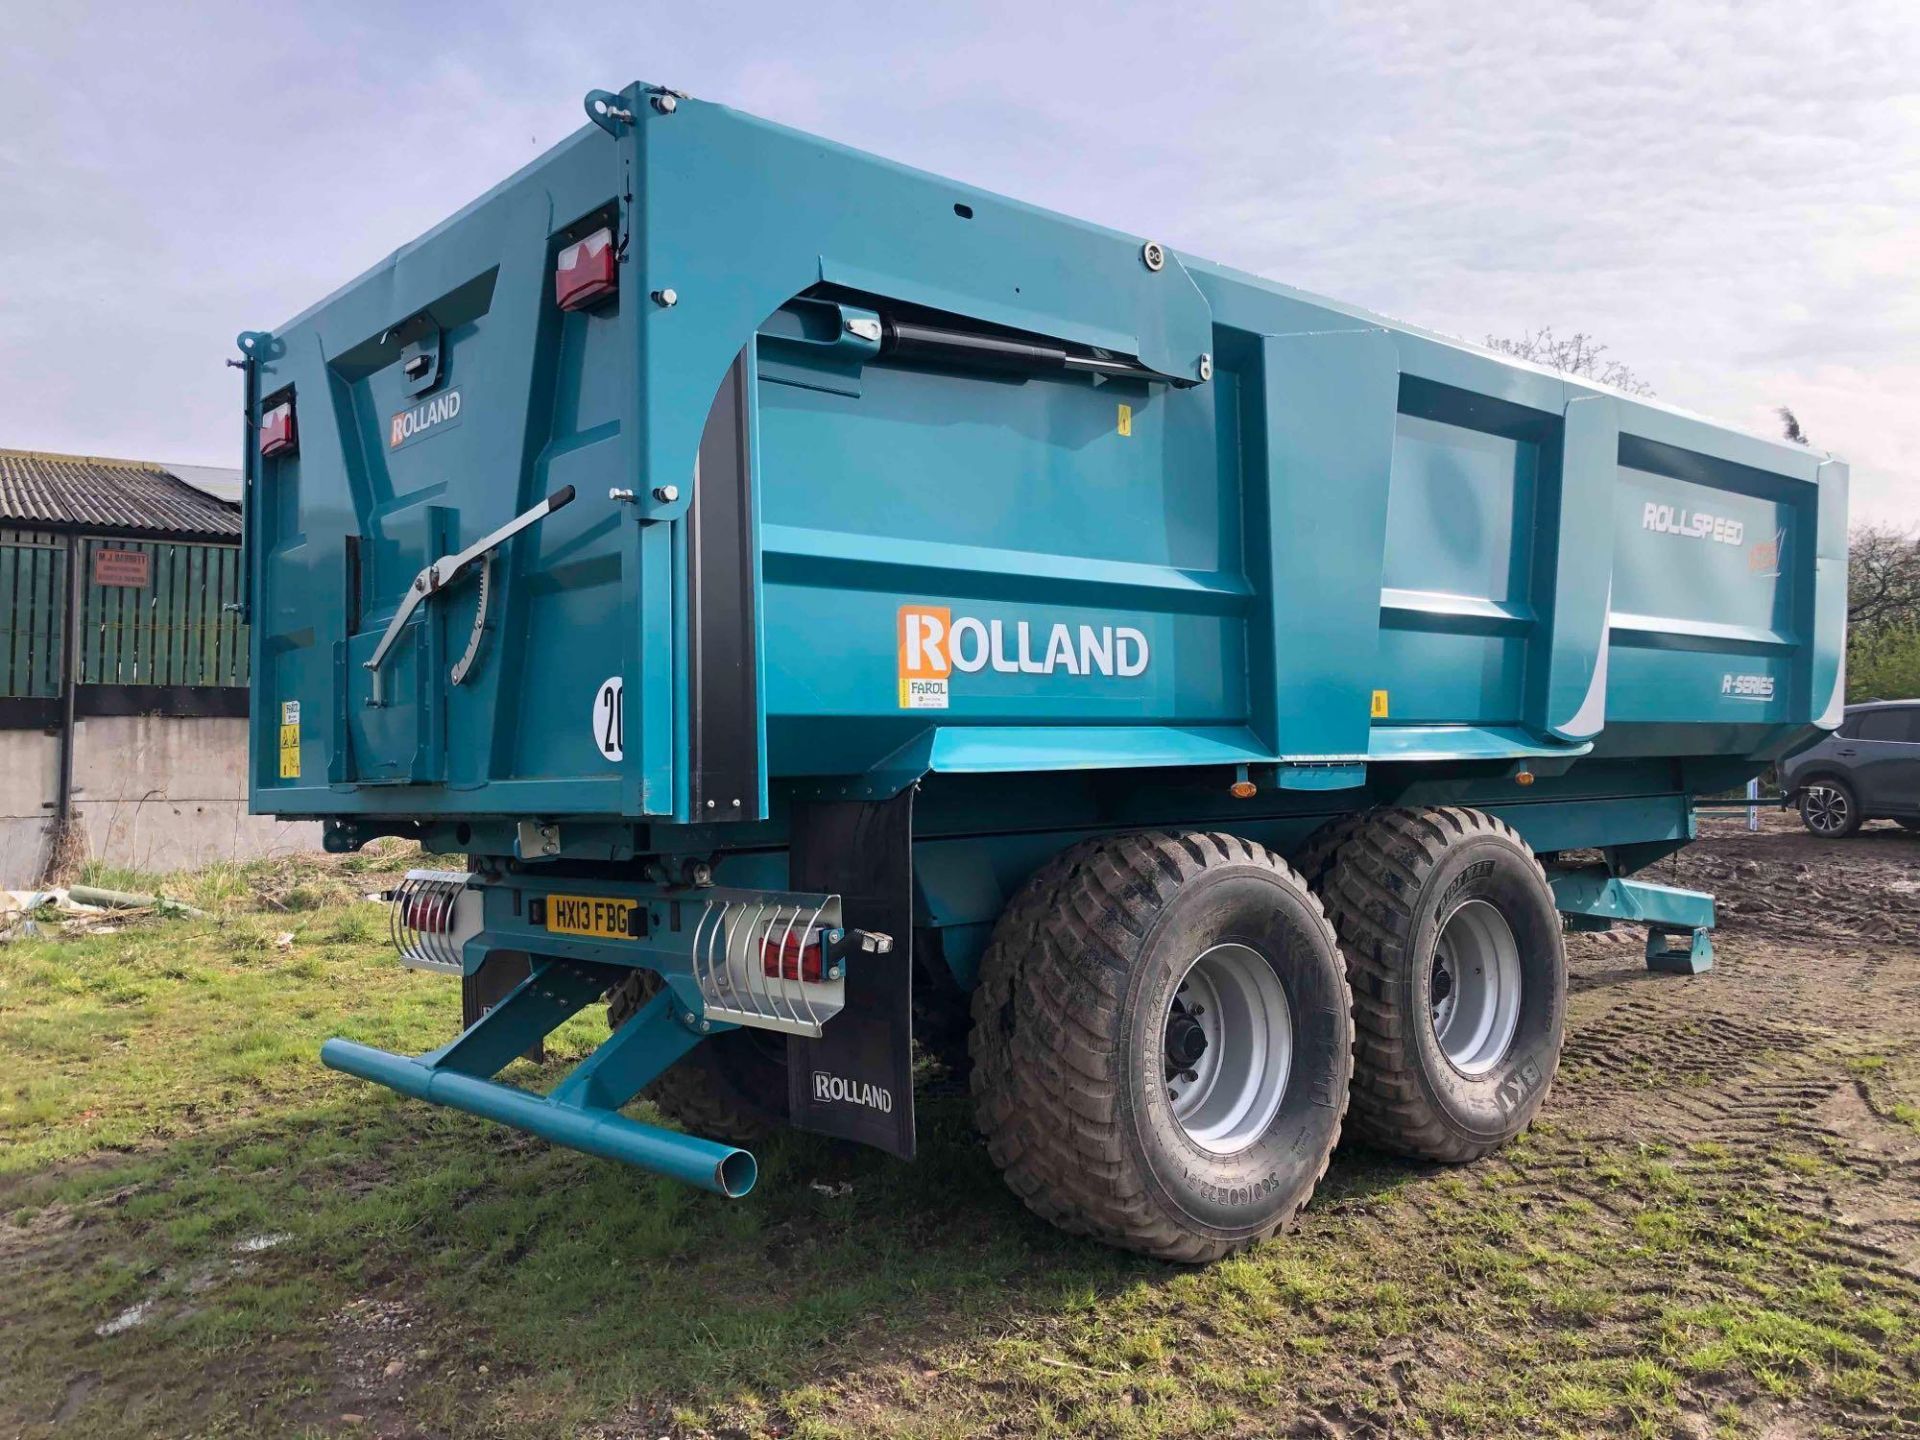 2022 Rolland Rollspeed 6835 18t twin axle grain trailer with sprung drawbar, air brakes, hydraulic t - Image 8 of 13